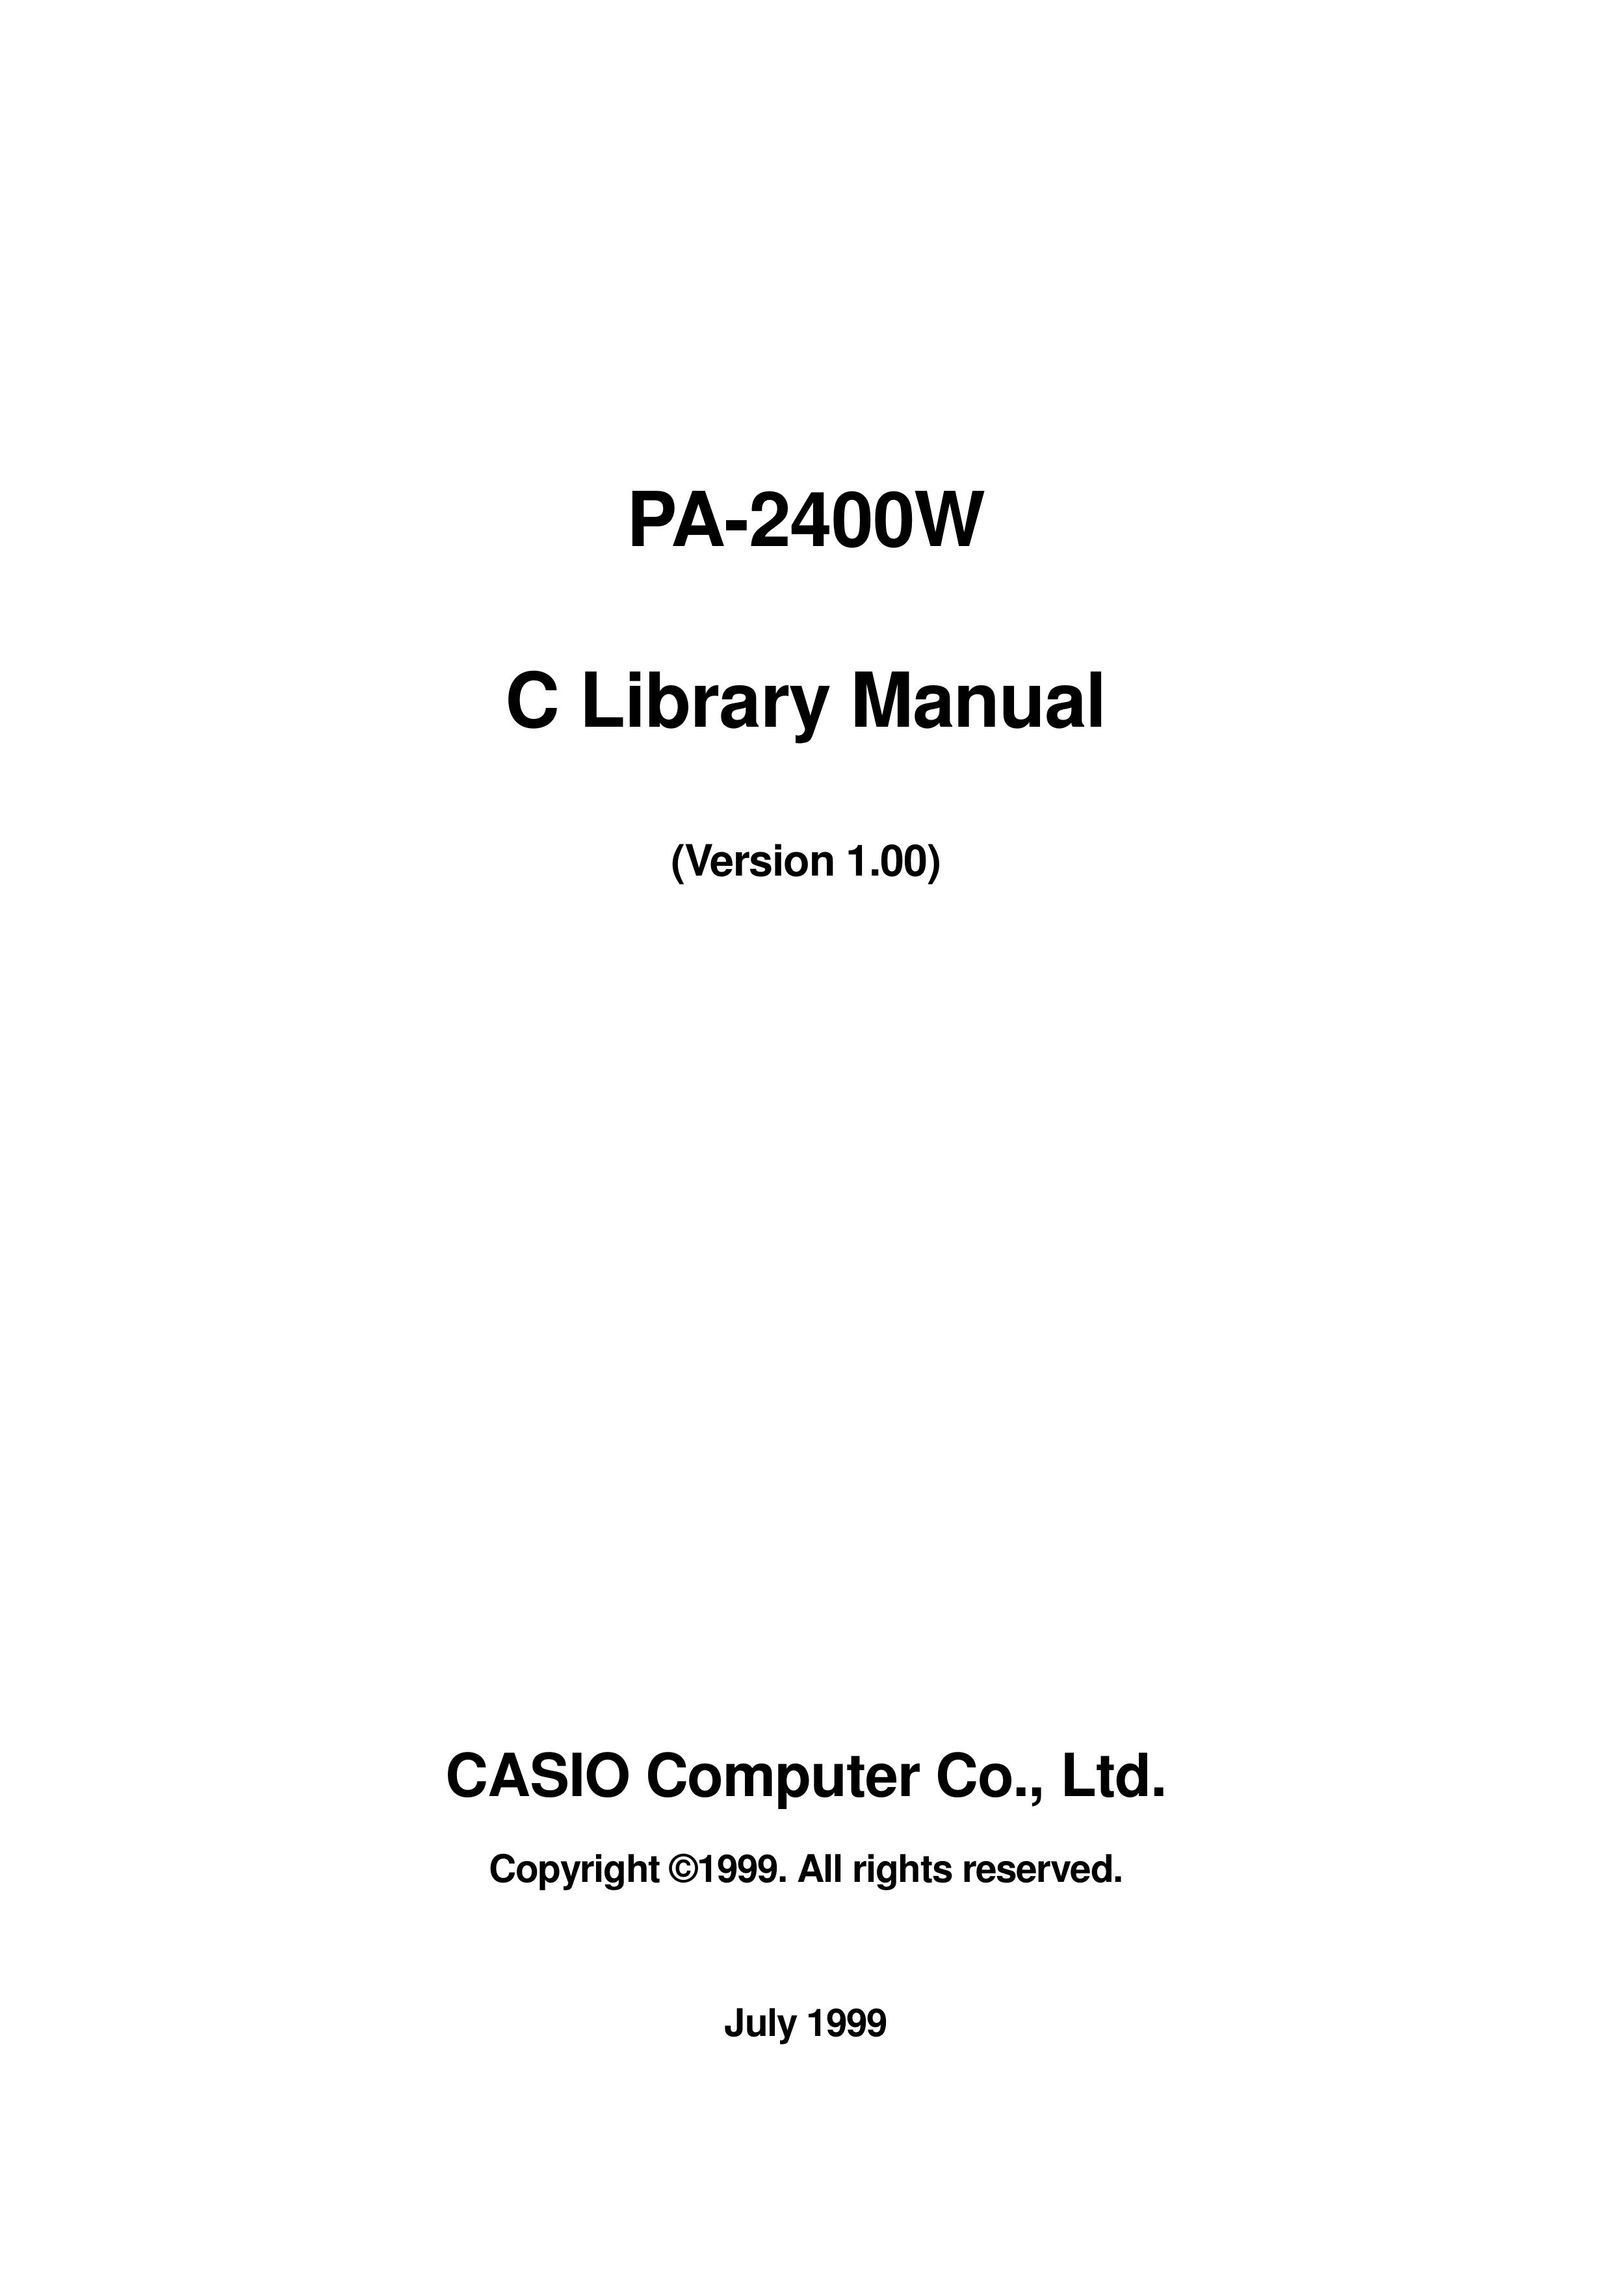 Casio PA-2400W PDAs & Smartphones User Manual